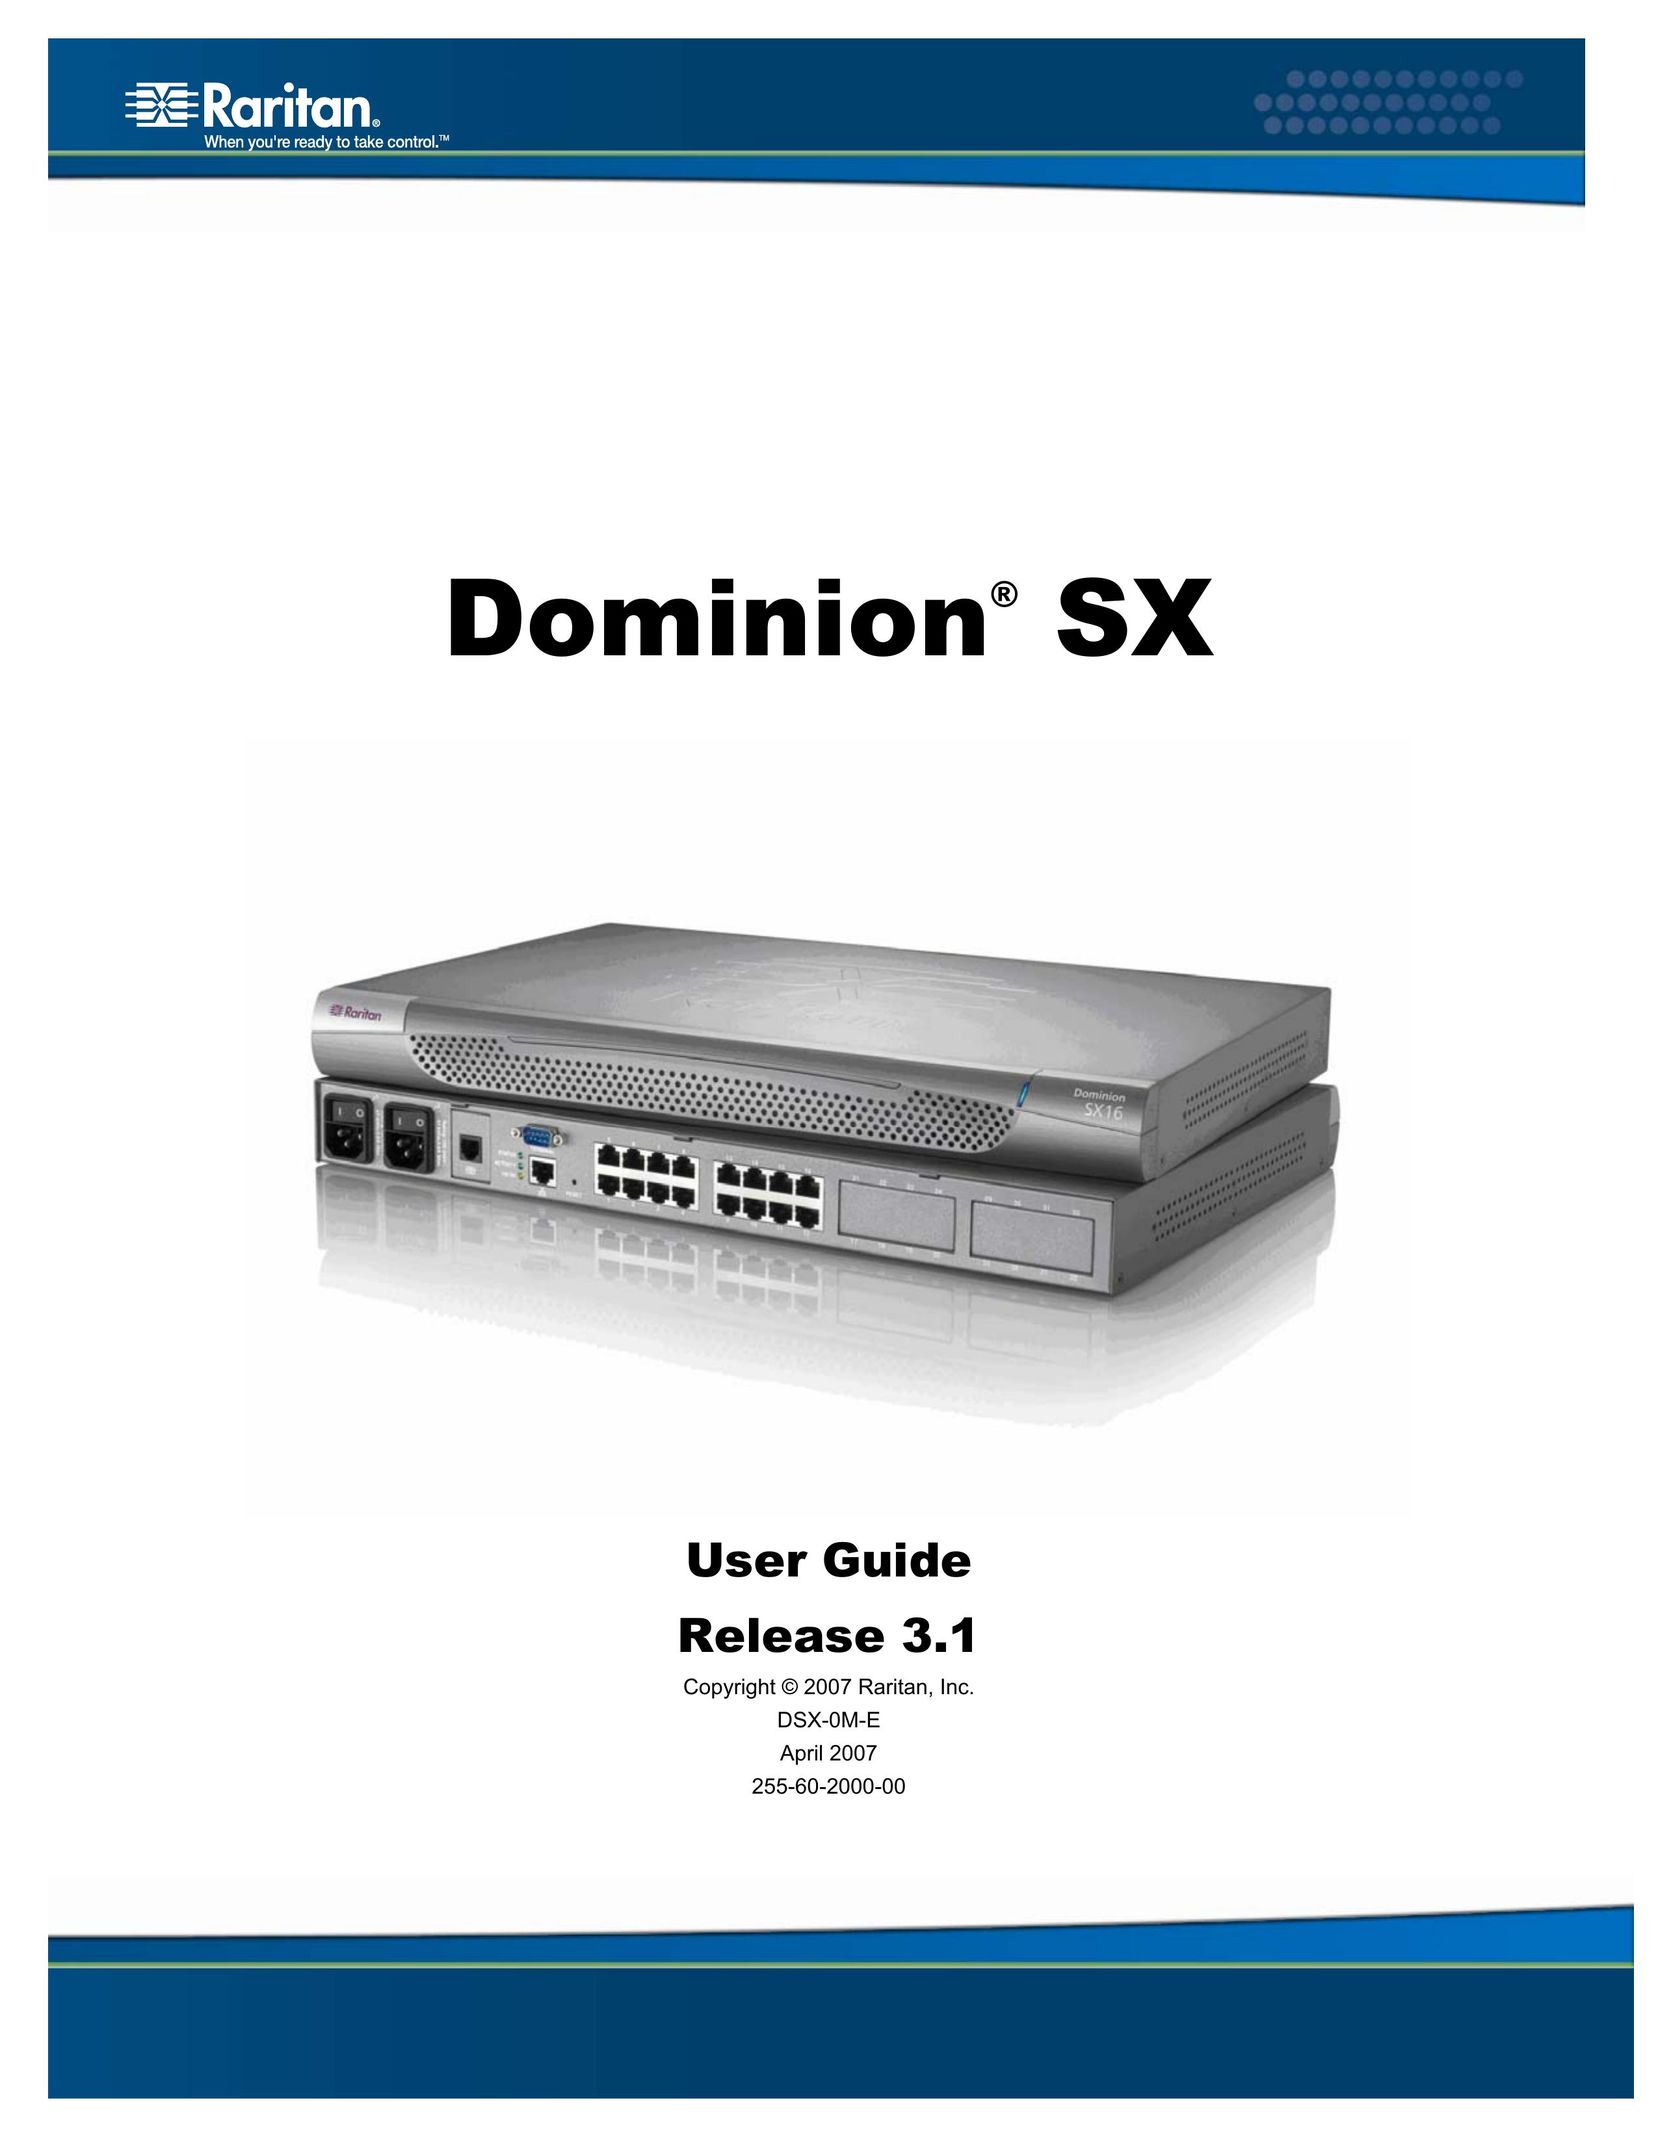 Raritan Computer SX Network Hardware User Manual